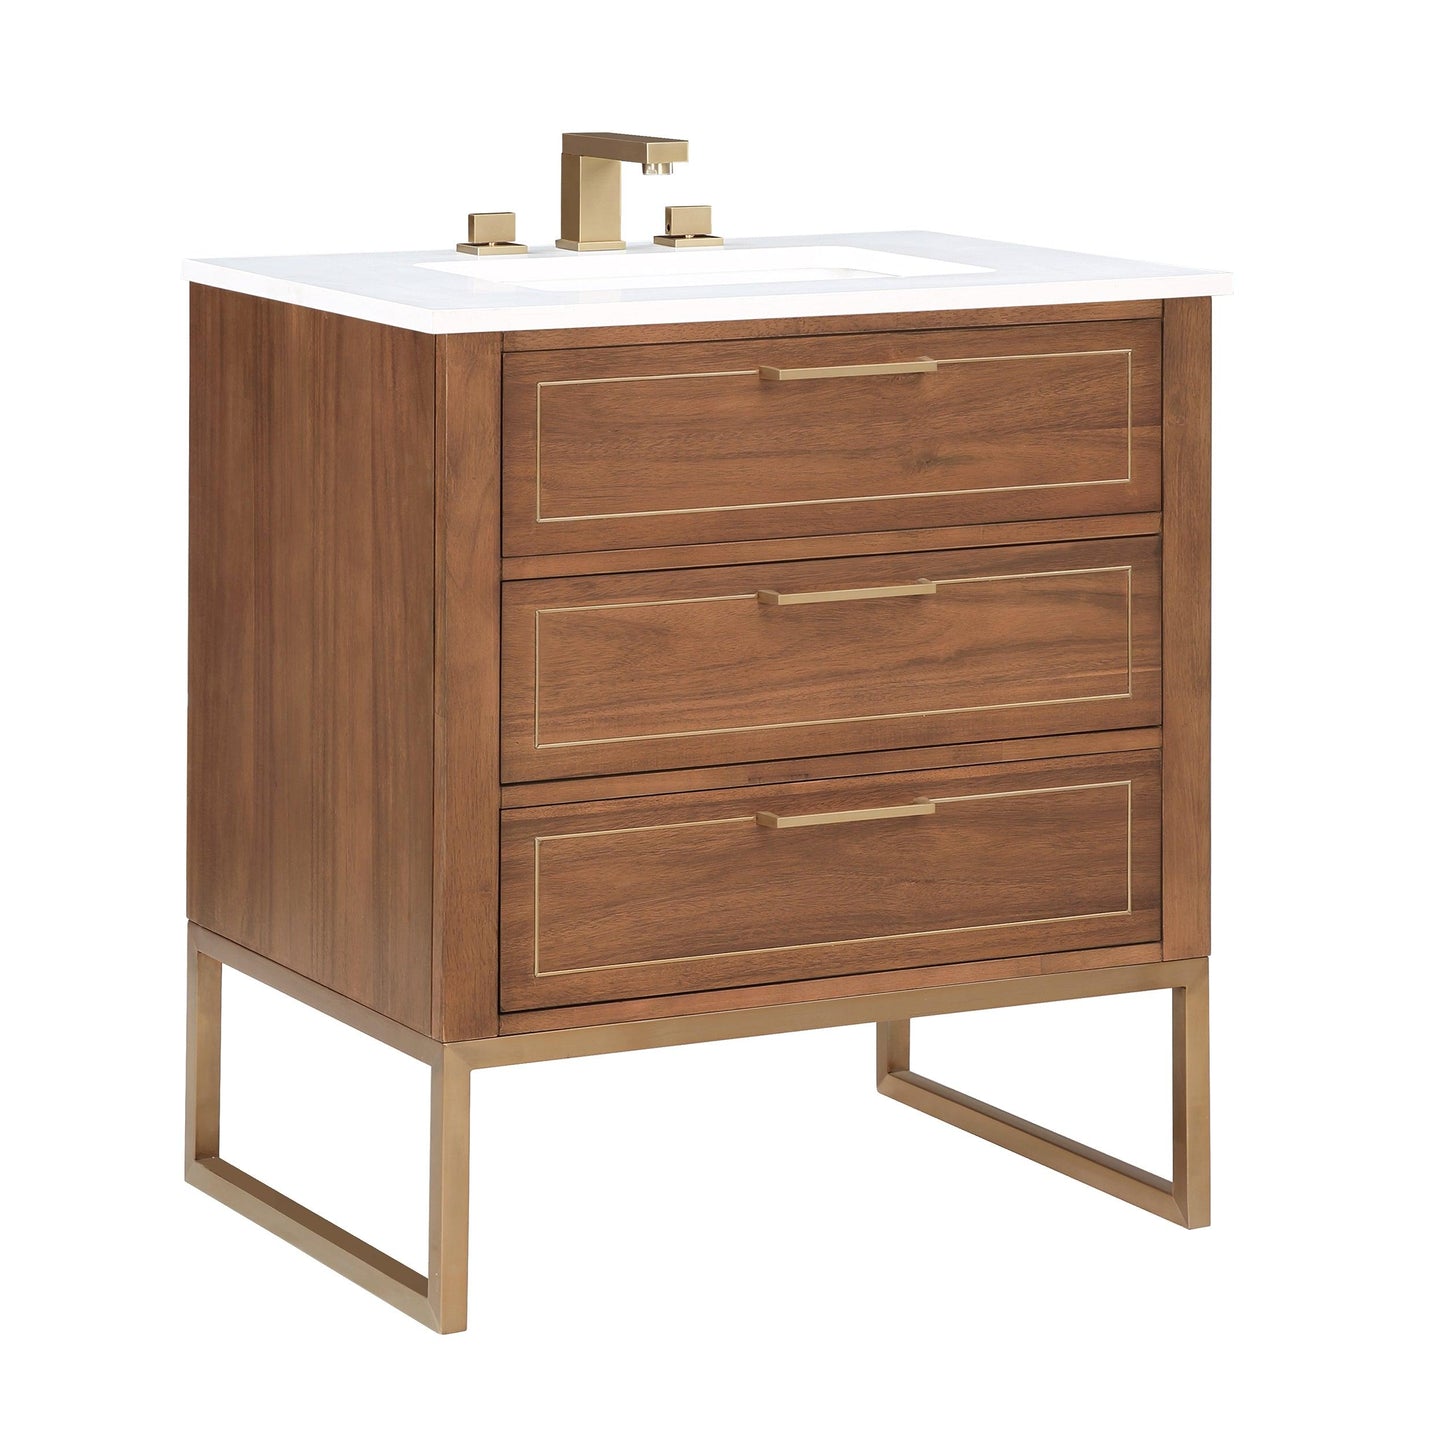 BEMMA Design Markham Single Bathroom Vanity Set with Quartz or Marble Top - Sea & Stone Bath